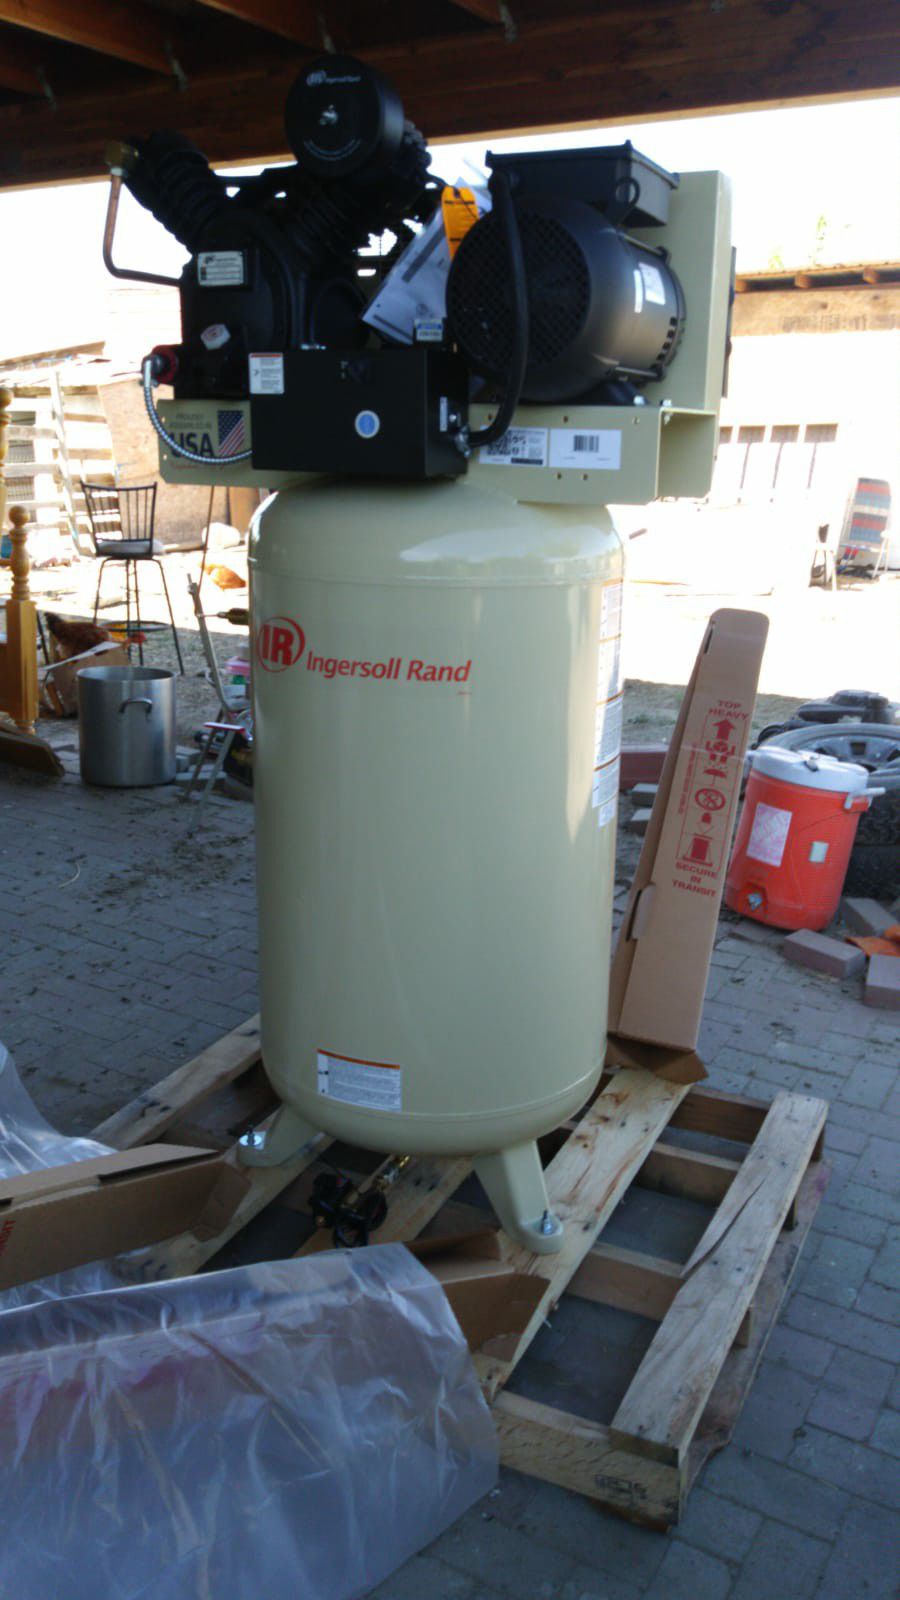 New Ingersoll Rand 80 gal compressor